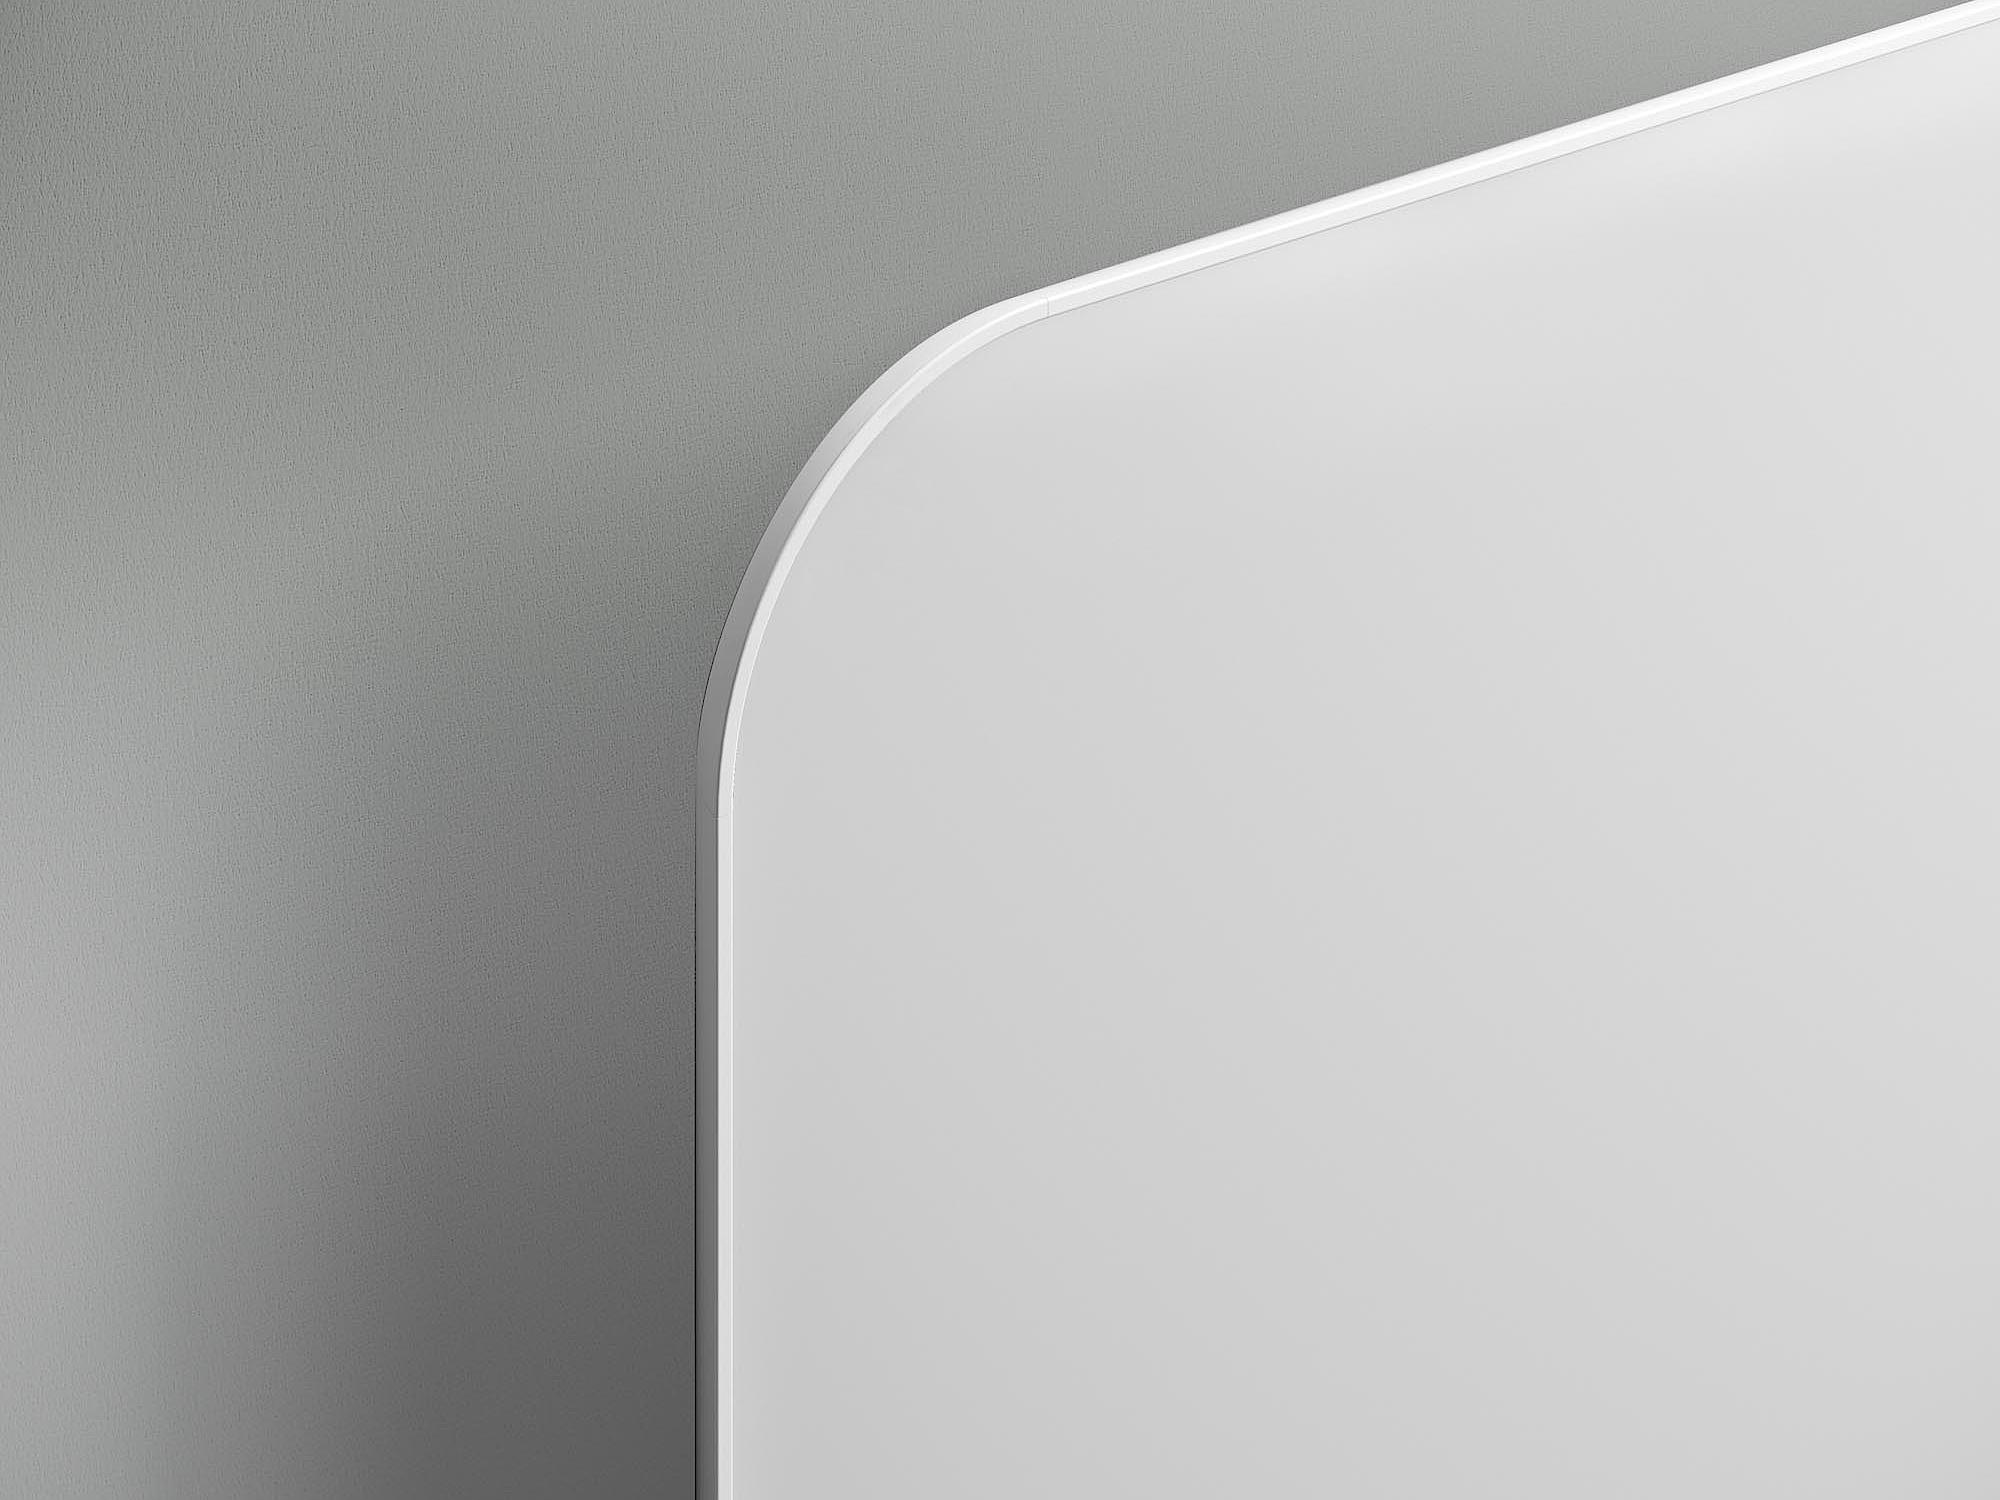 Kermi Elveo design and bathroom radiators with White glass front.